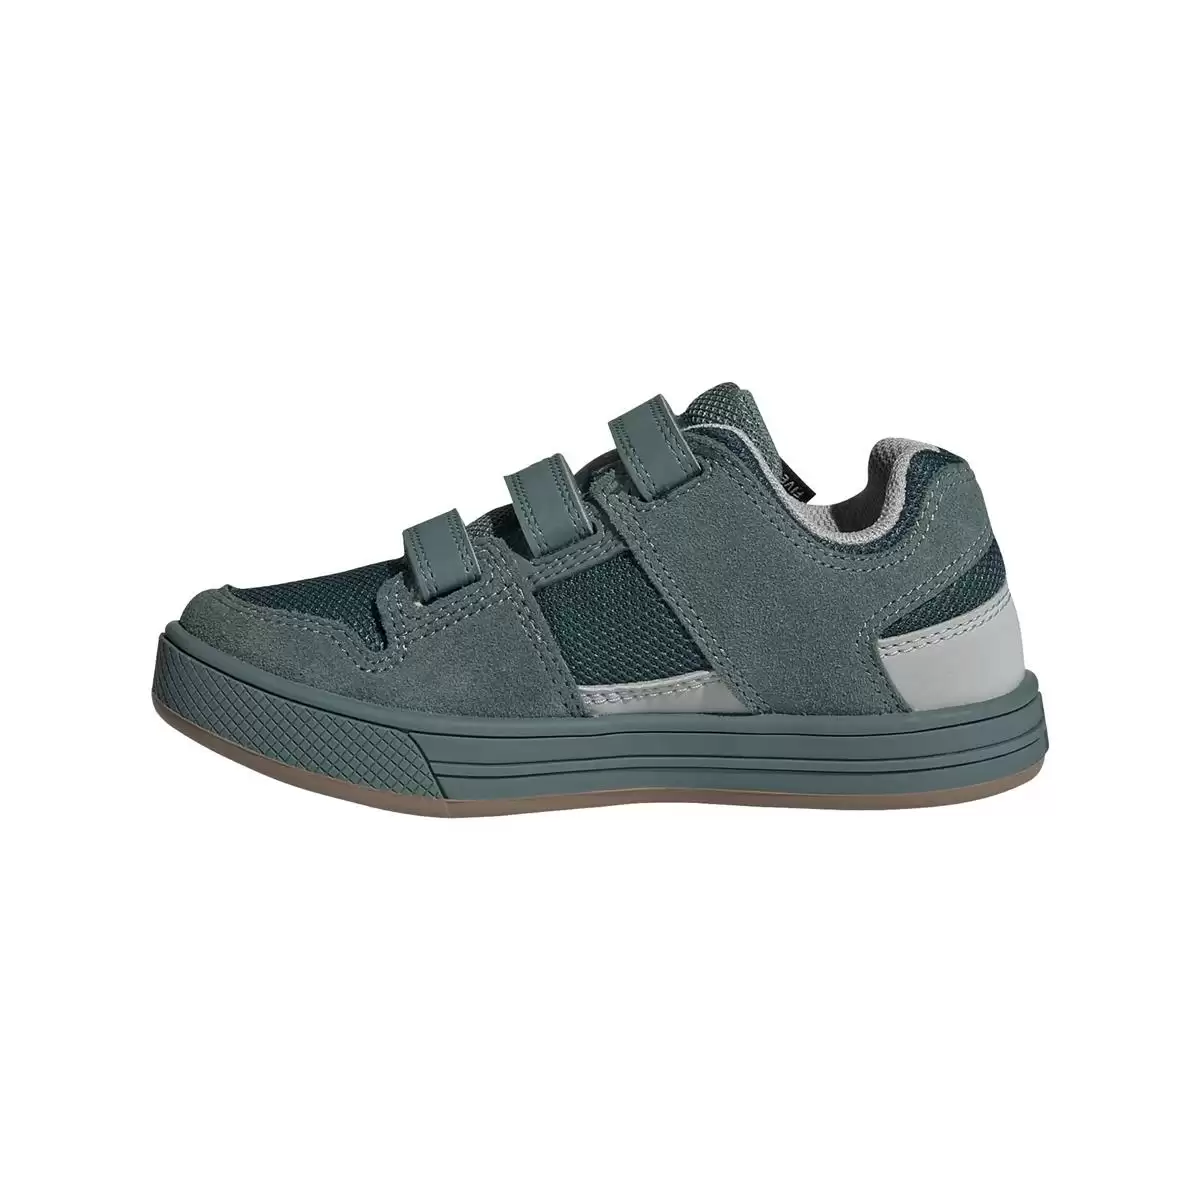 MTB Flat Shoes Freerider Kids VCS Junior Aqua Size 35 #3